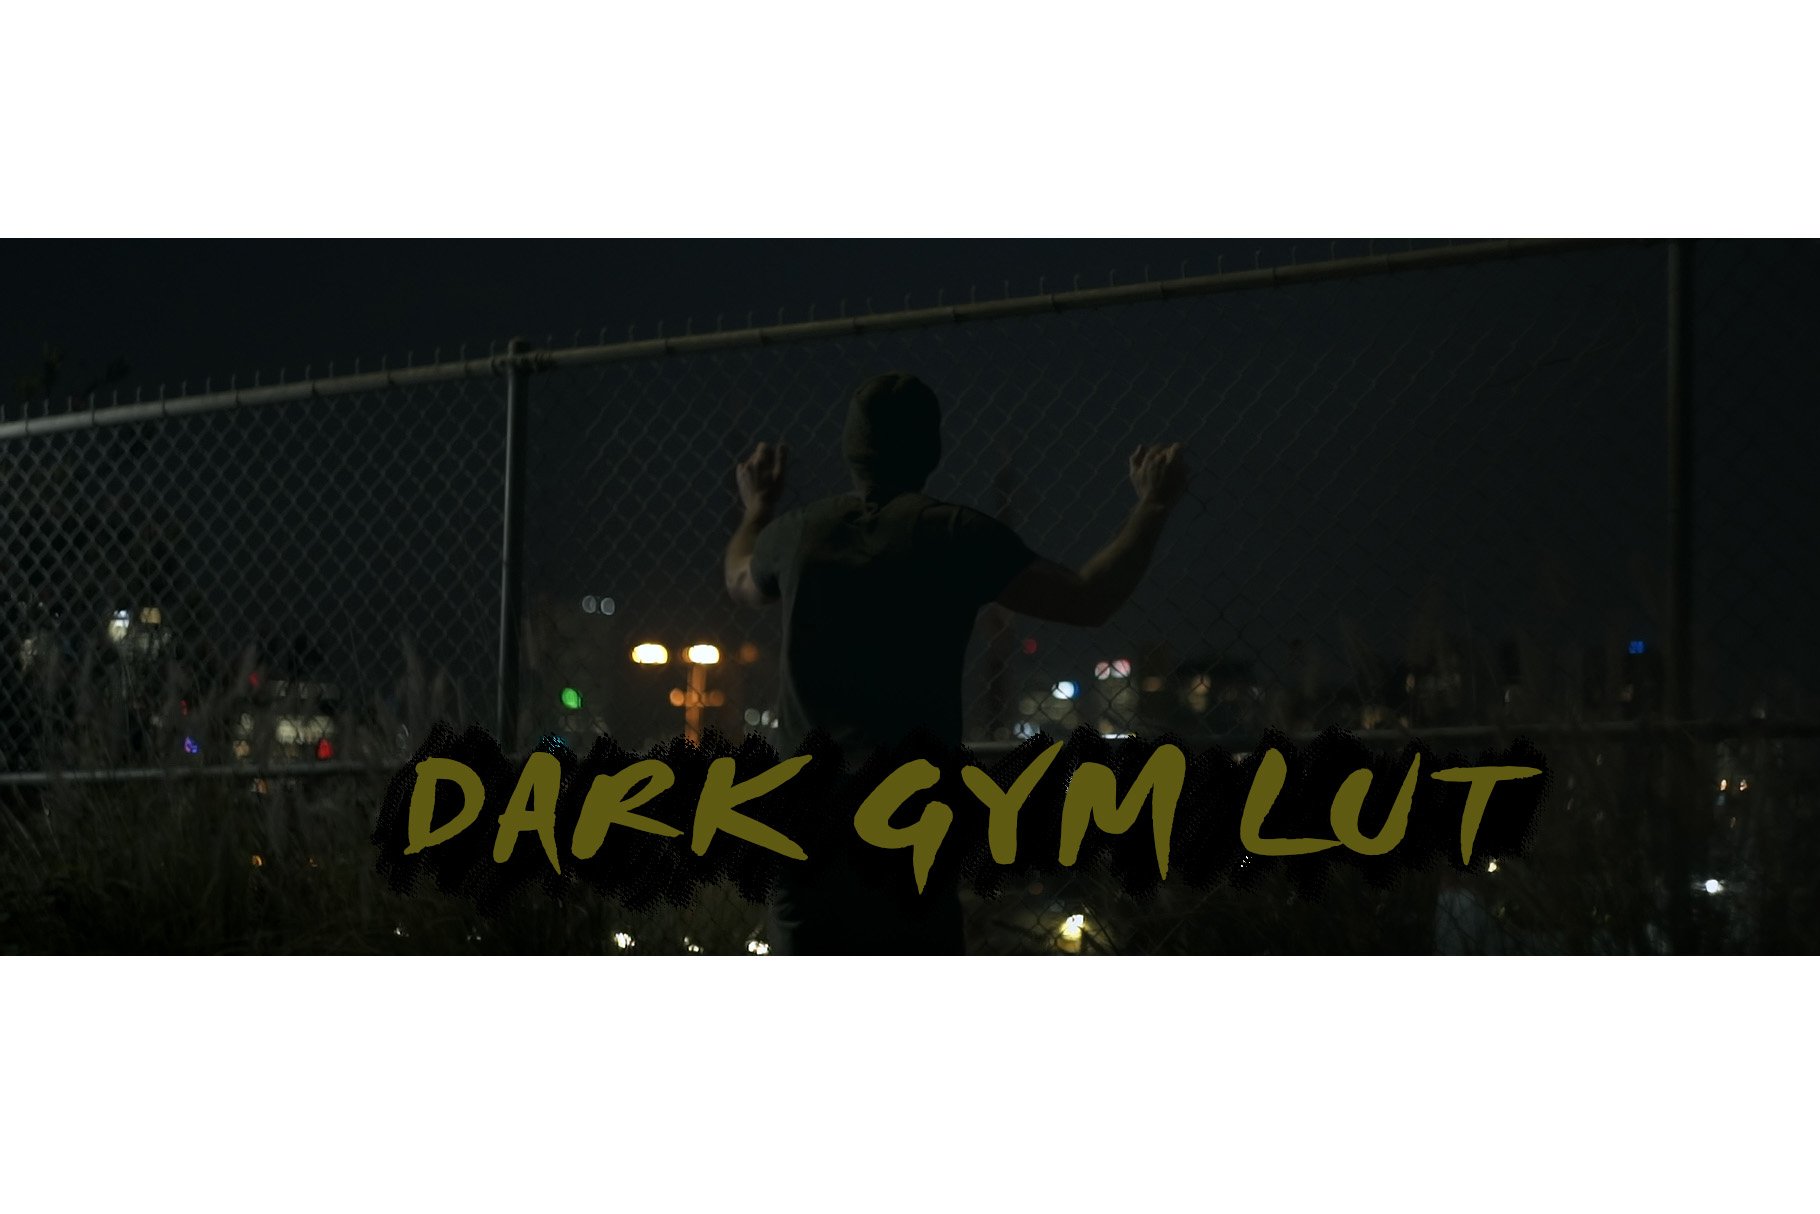 Dark Gym Cinematic LUTcover image.